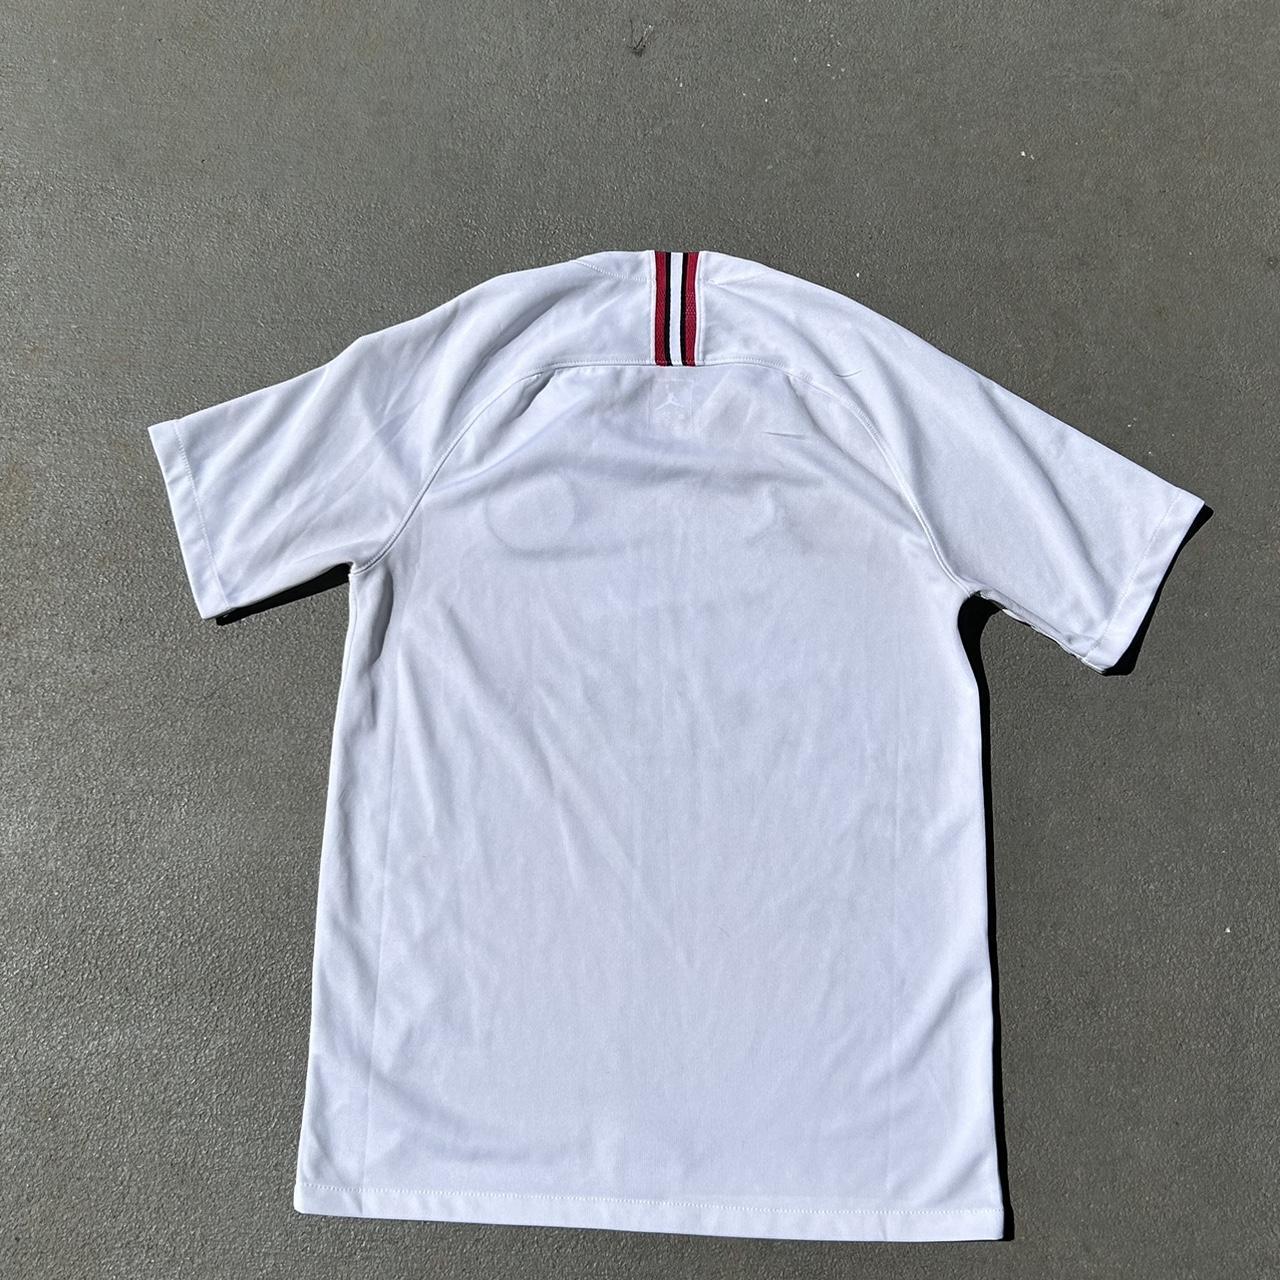 Jordan Men's White and Black T-shirt (3)